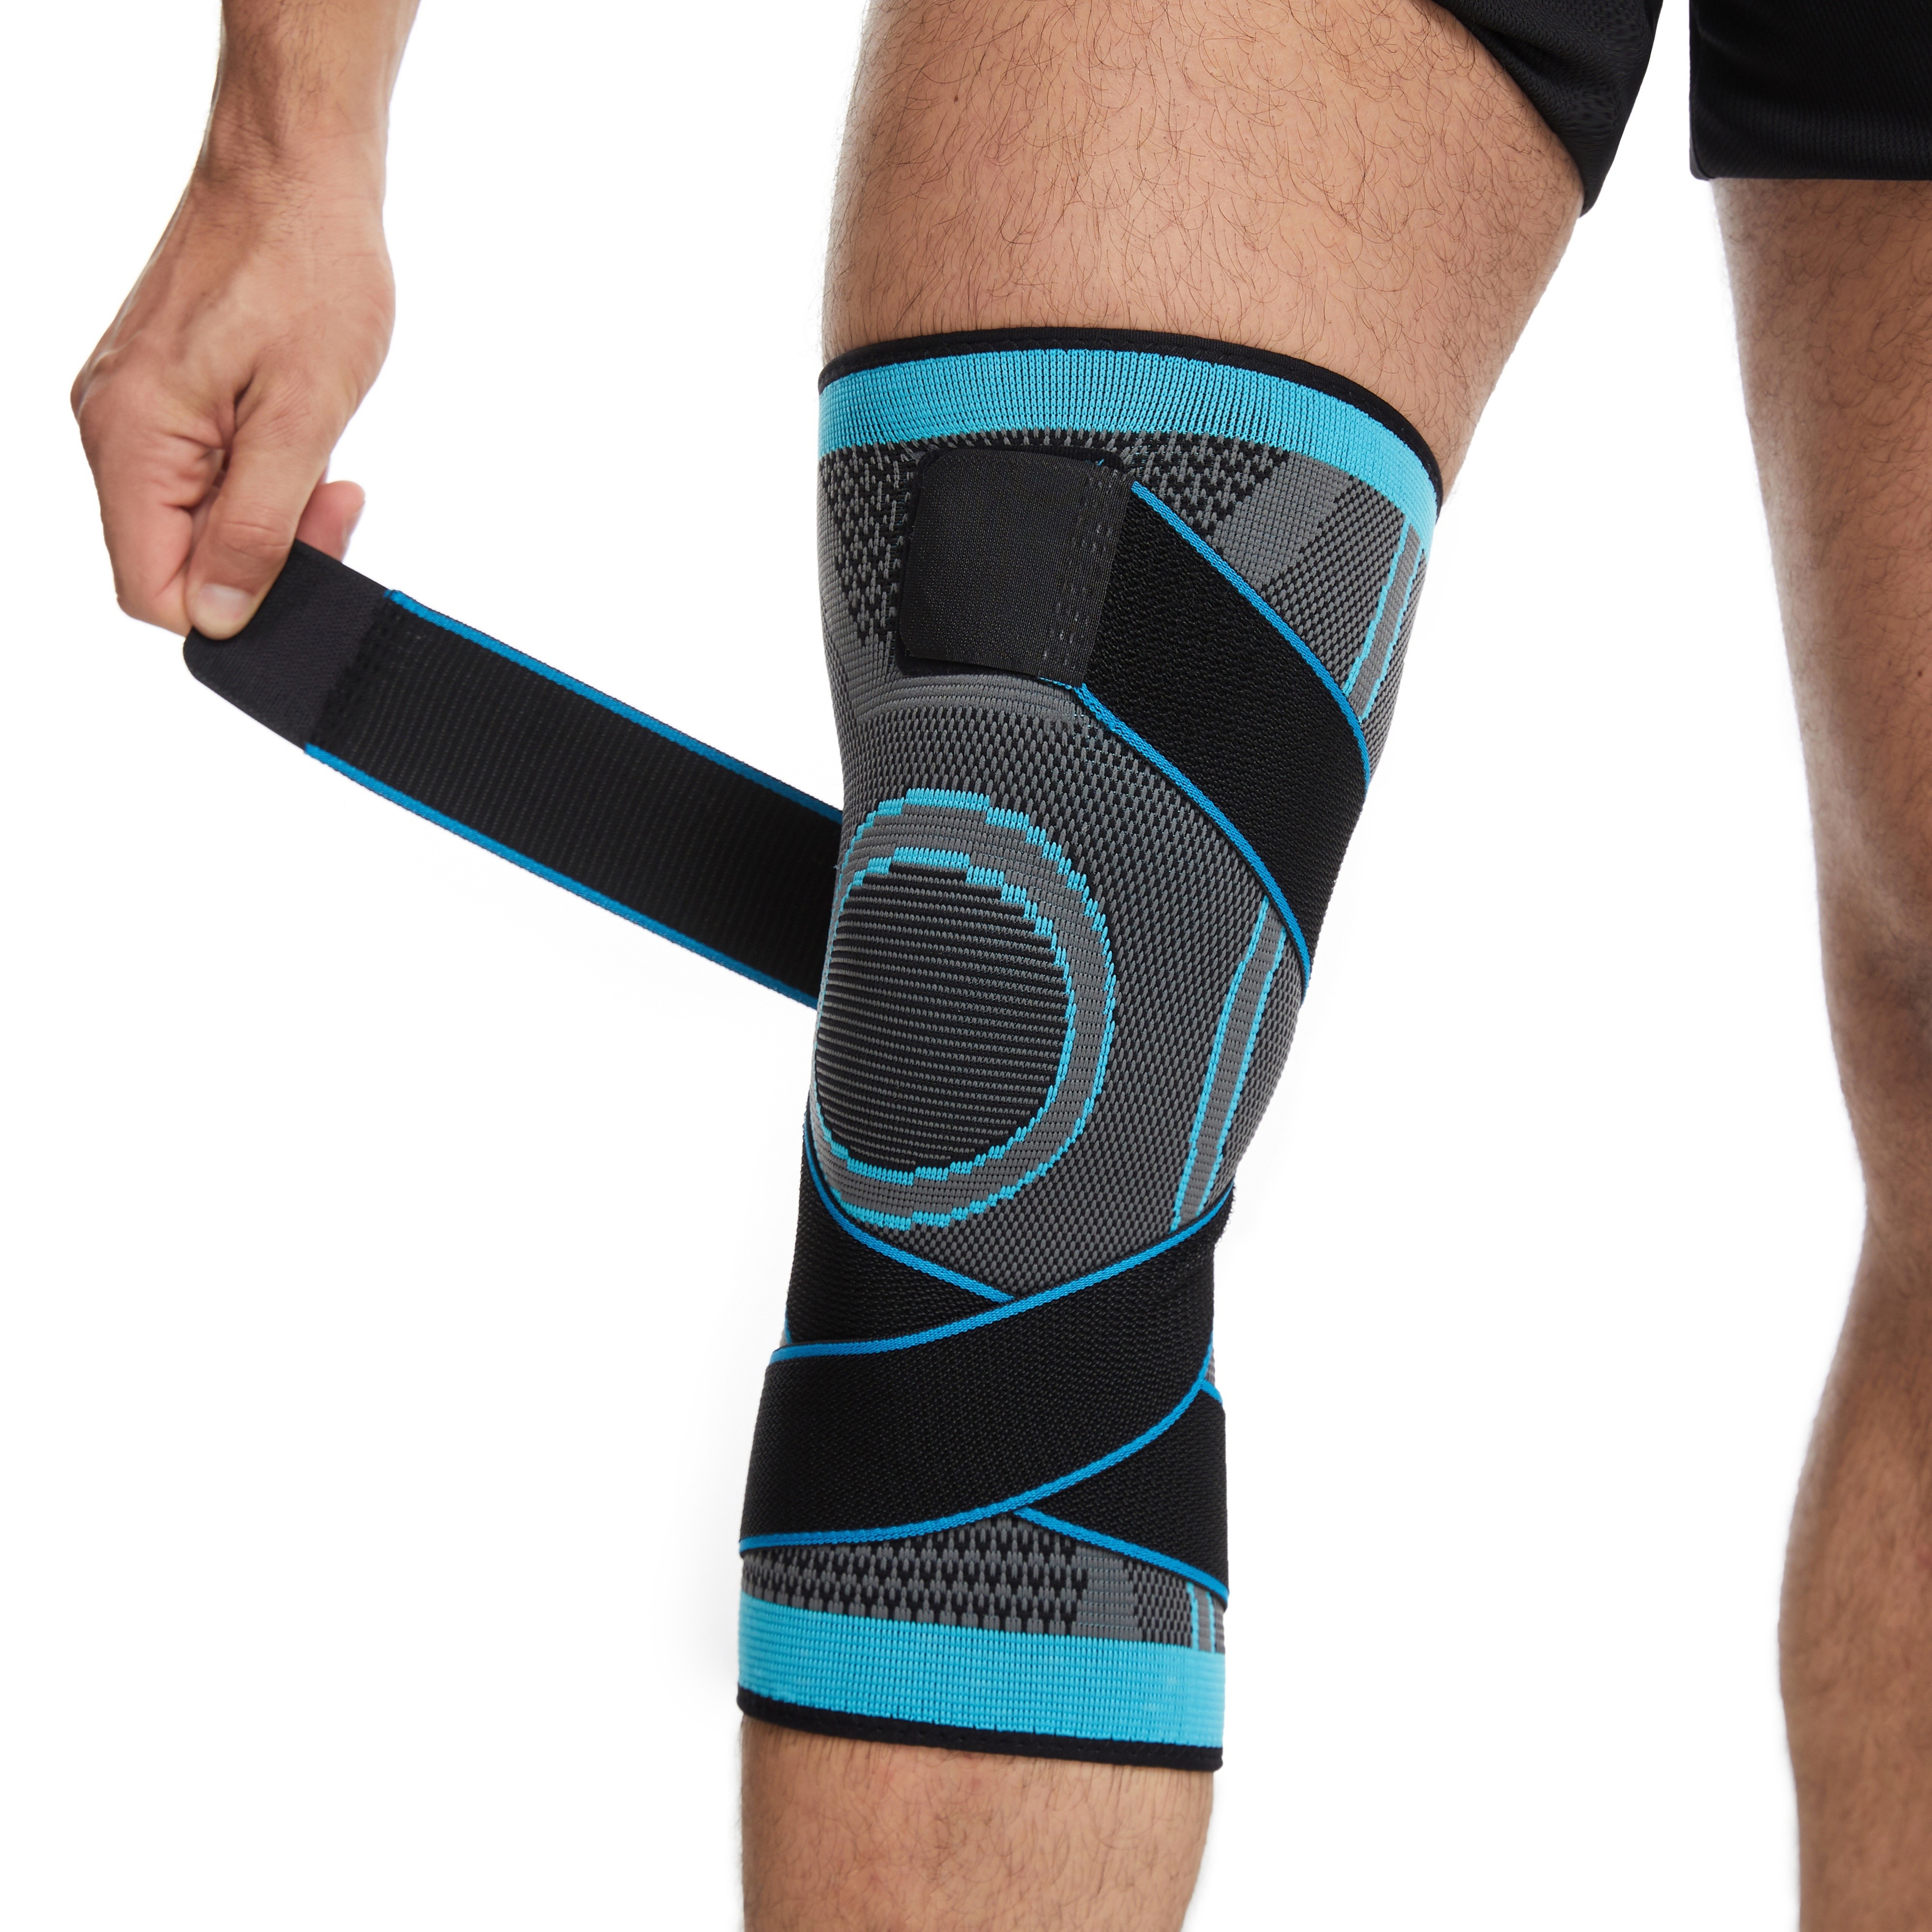 Rodilleras deportivas de nailon tejido - Antideslizantes de silicona para  correr - Protección cálida para las rodillas